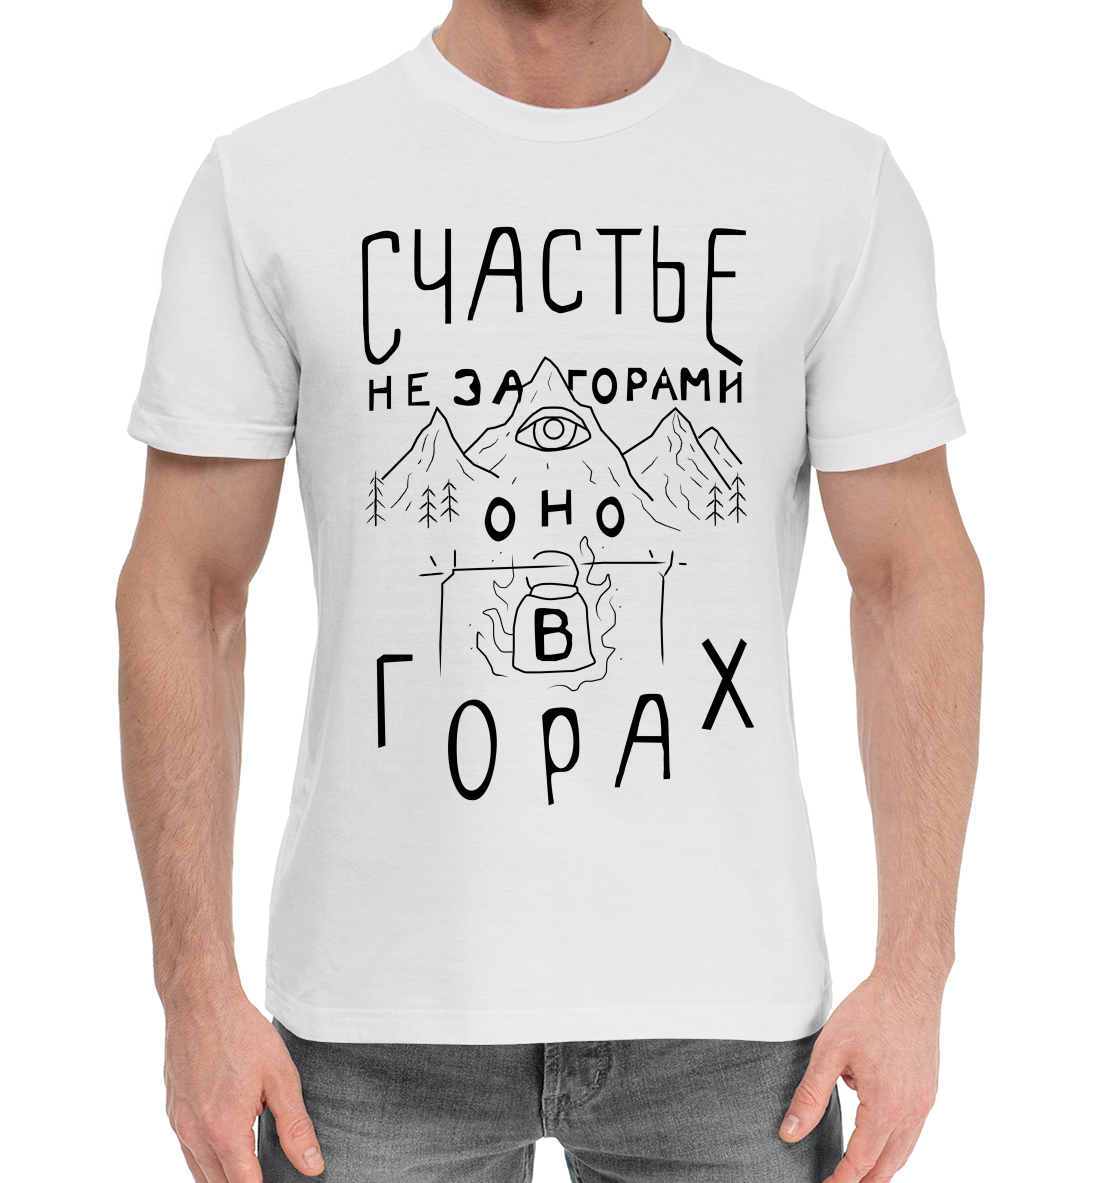 Мужская Хлопковая футболка с надписью Счастье не за горами, артикул NDP-967525-hfu-2mp